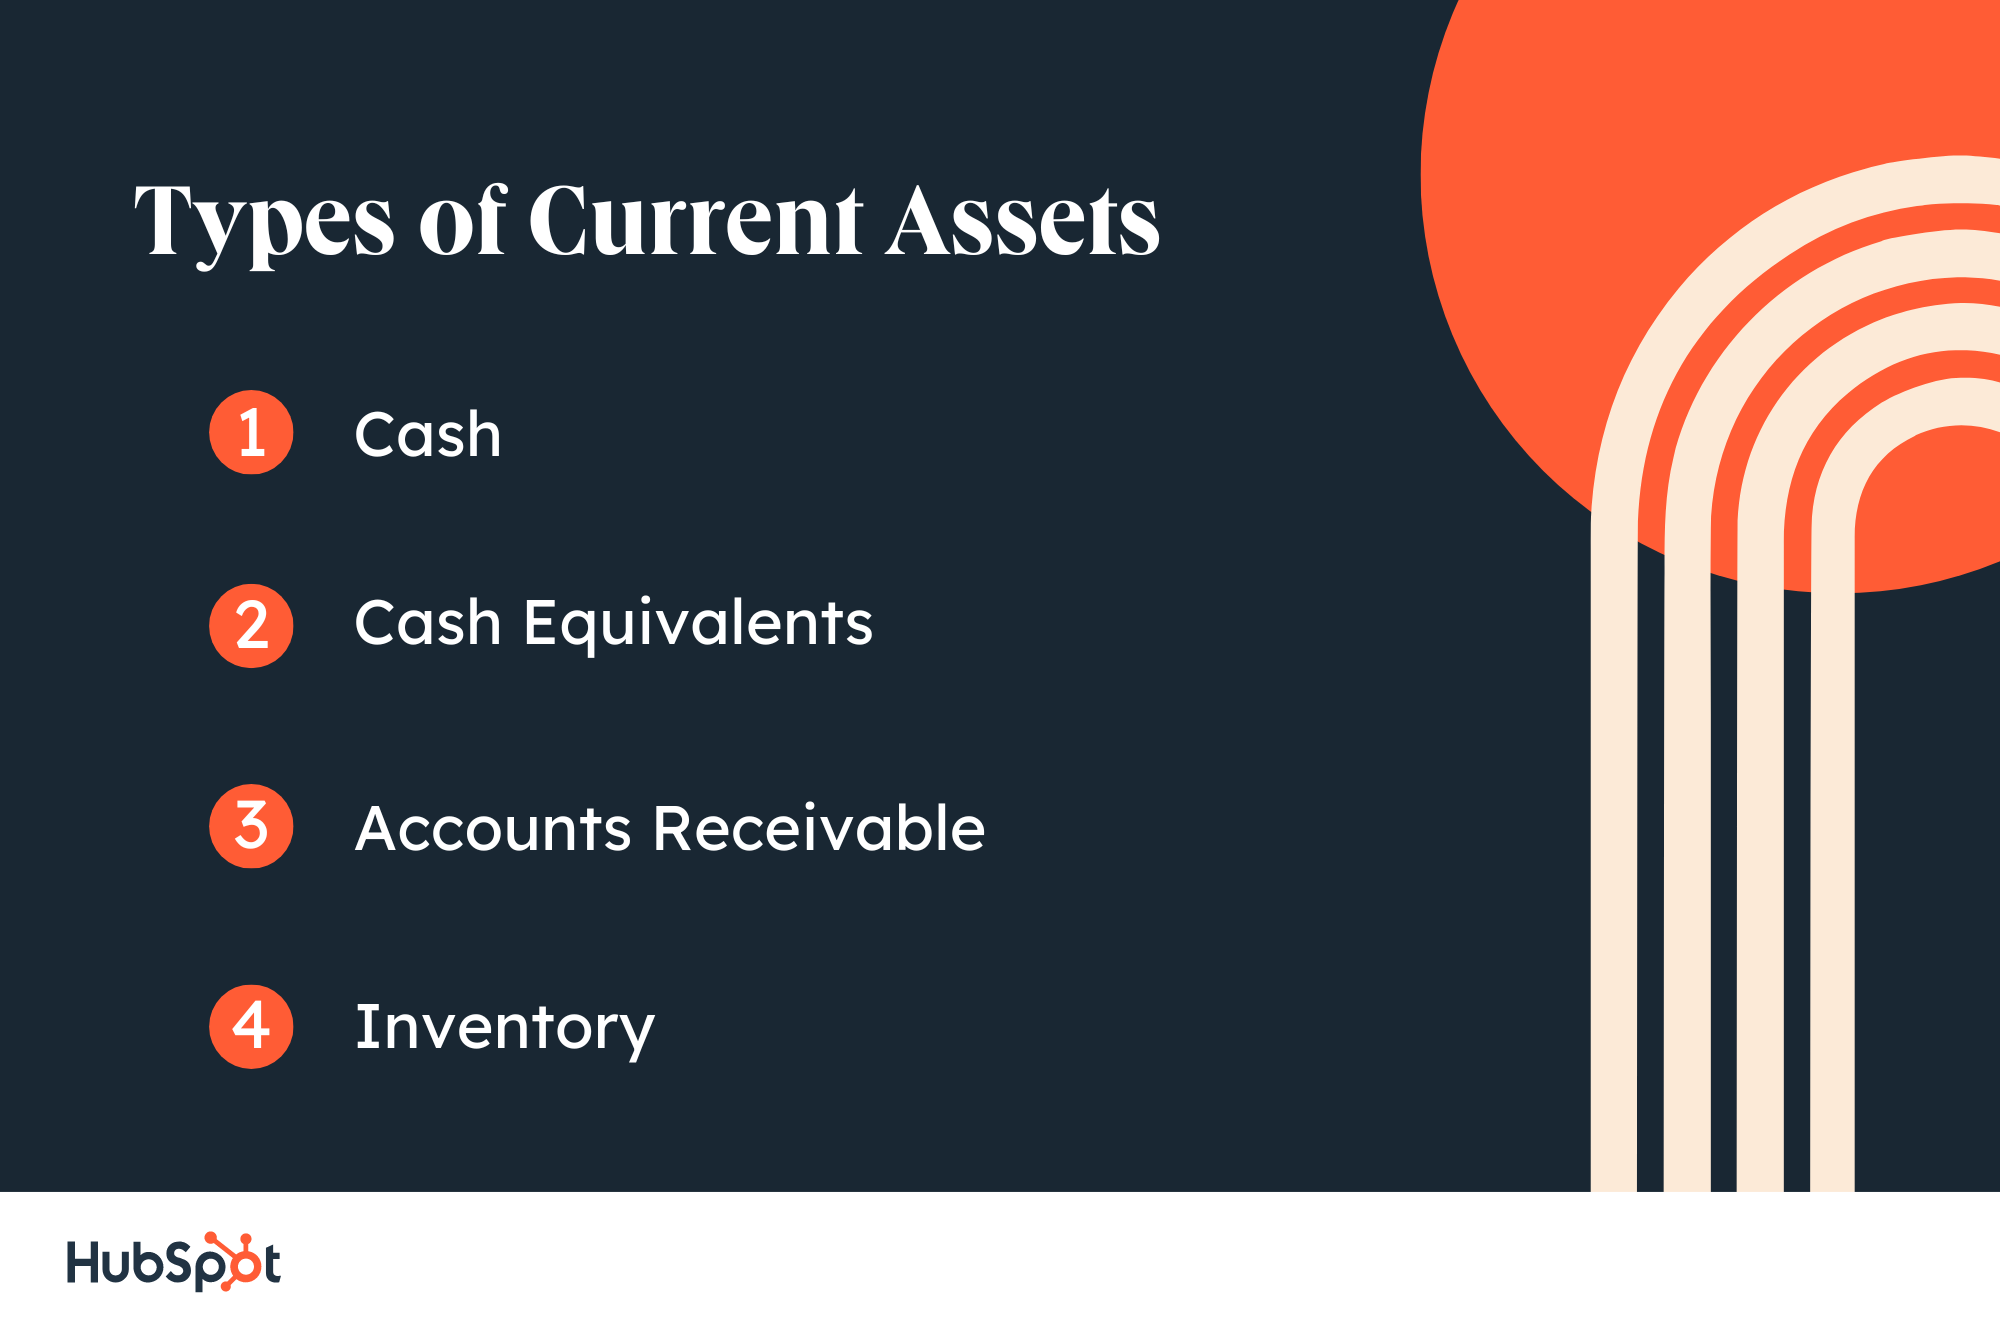 Are Supplies a Current Asset?